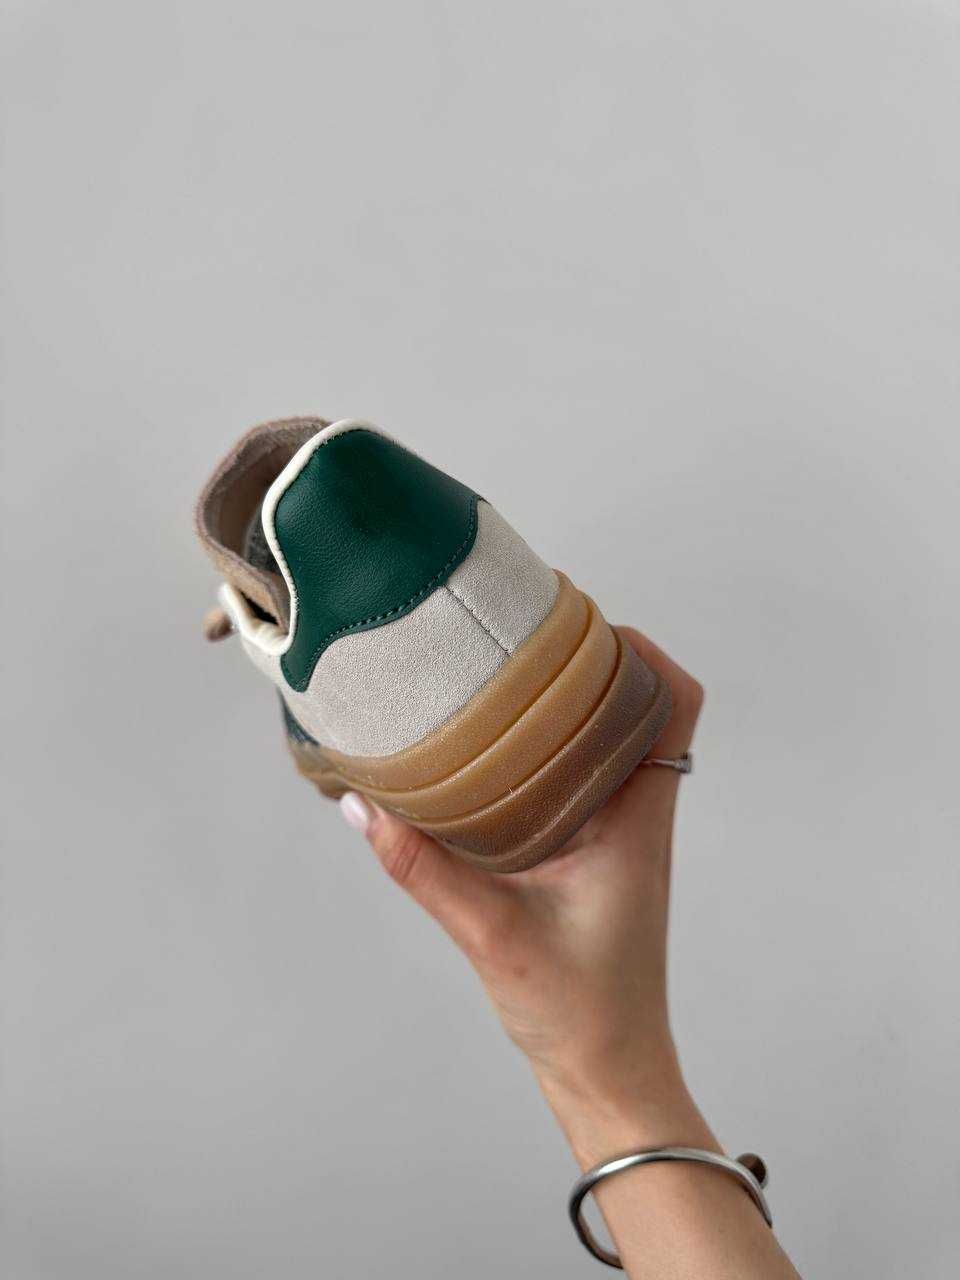 Adidas Gazelle Bold Platforn Cream / Green